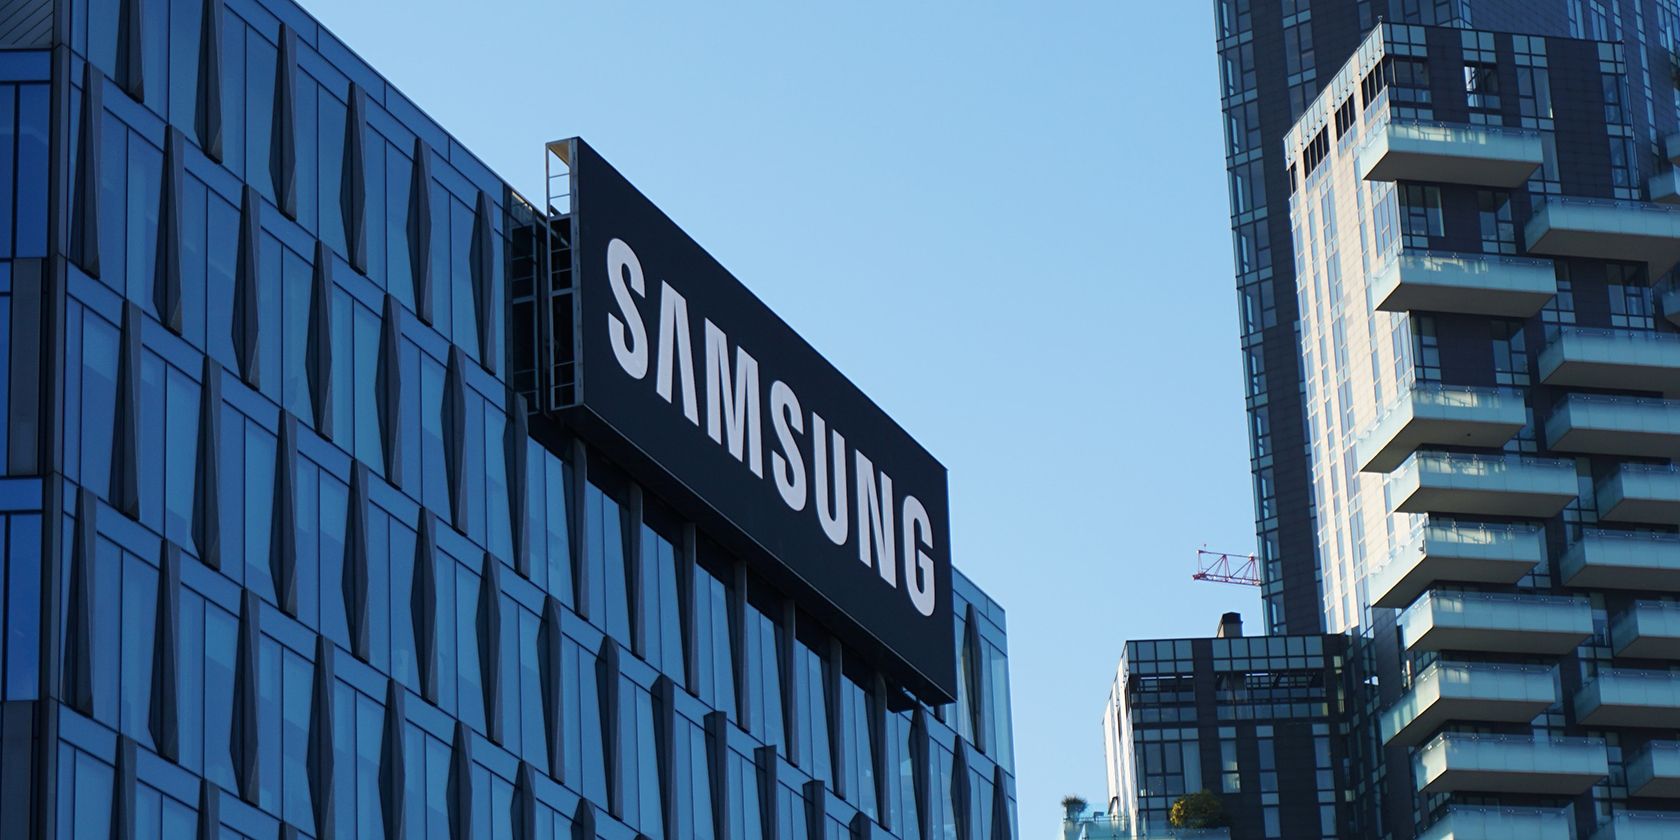 Samsung logo on a building